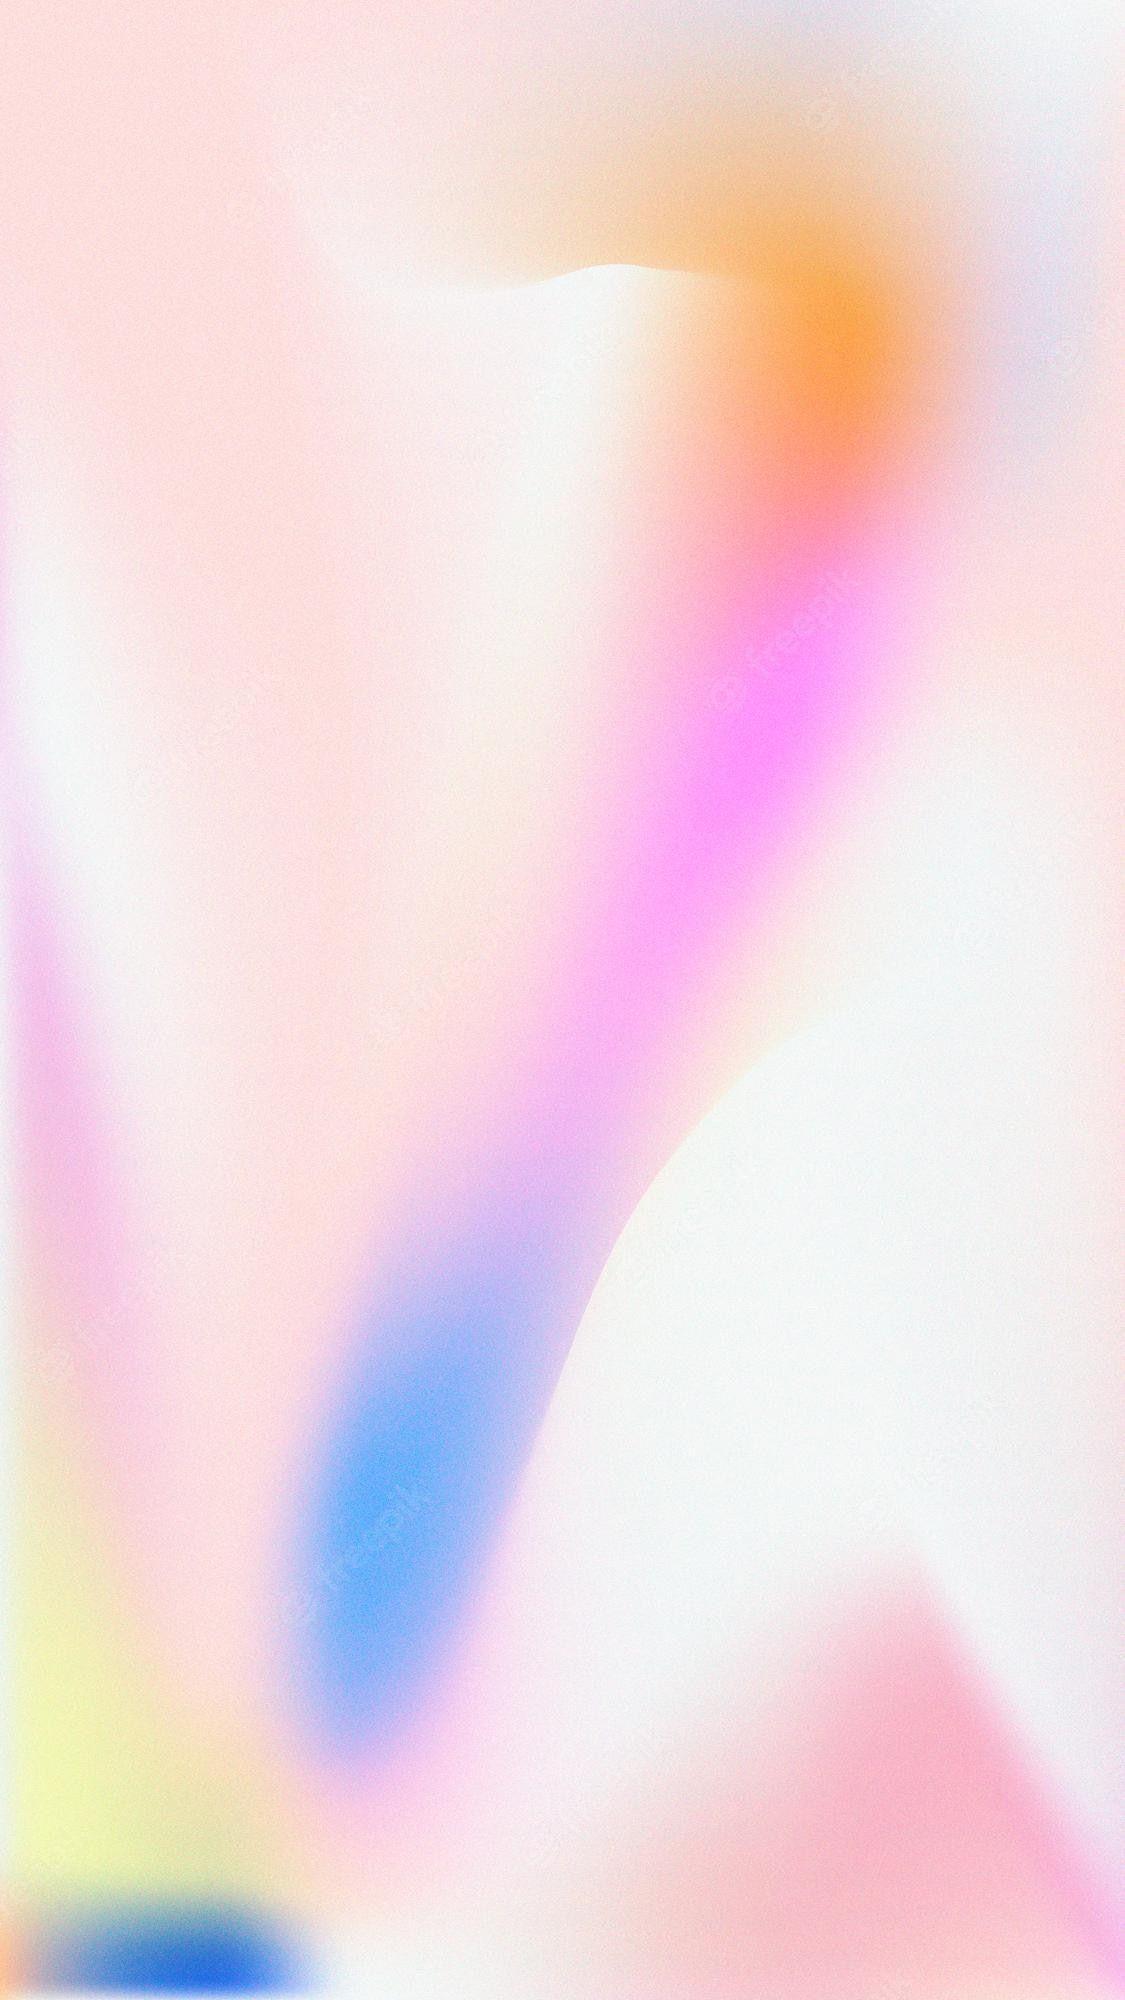 Free Vector. Blur gradient abstract mobile wallpaper vector